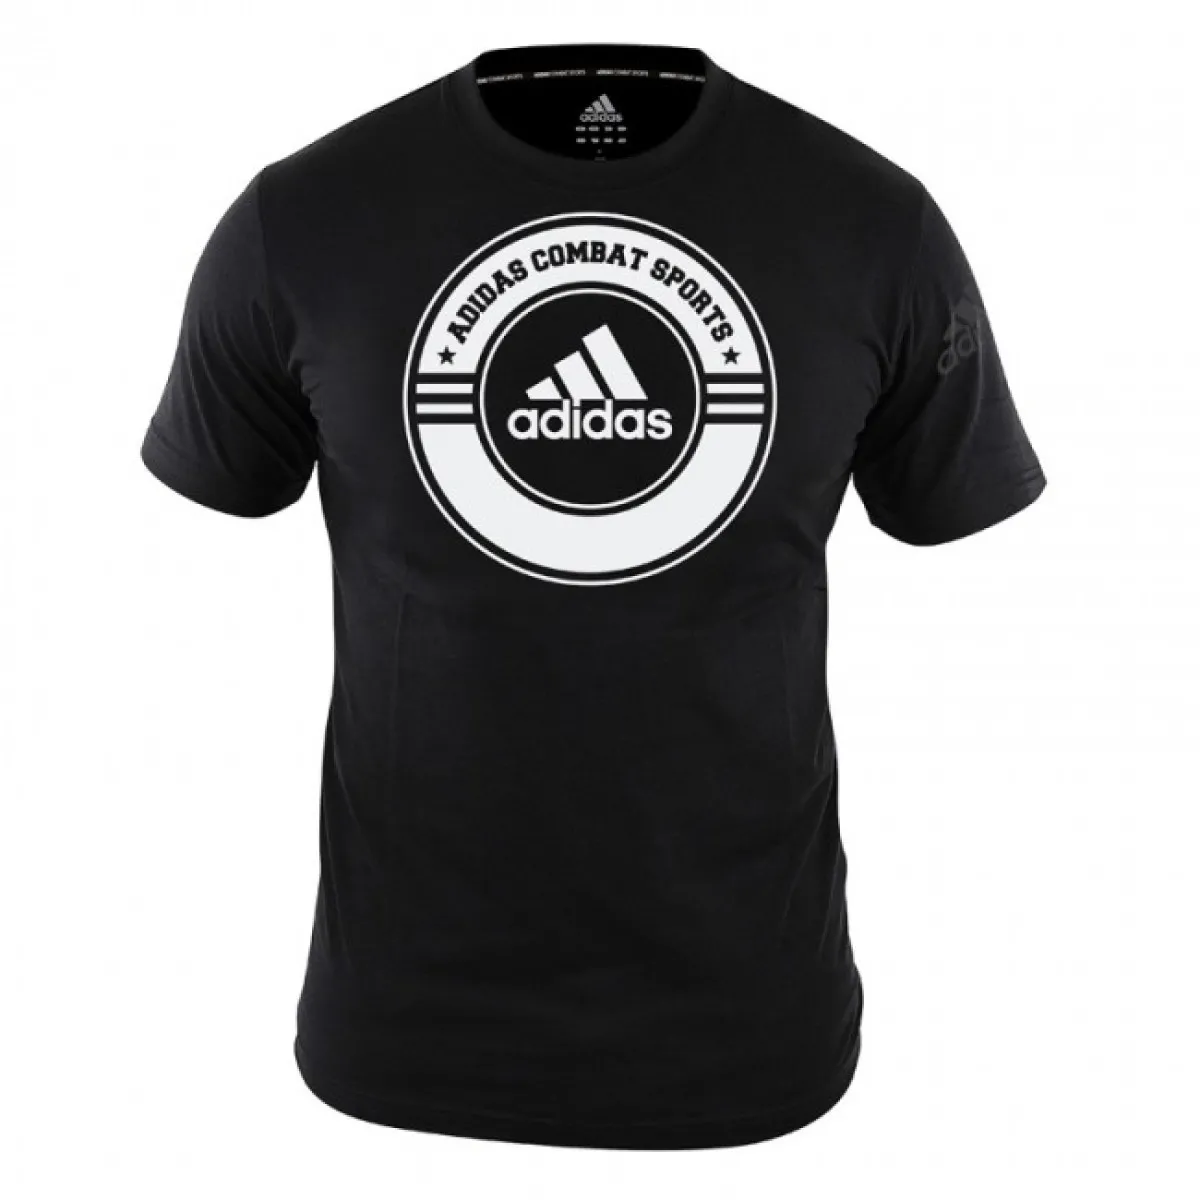 adidas T-Shirt Combat Sports noir/blanc